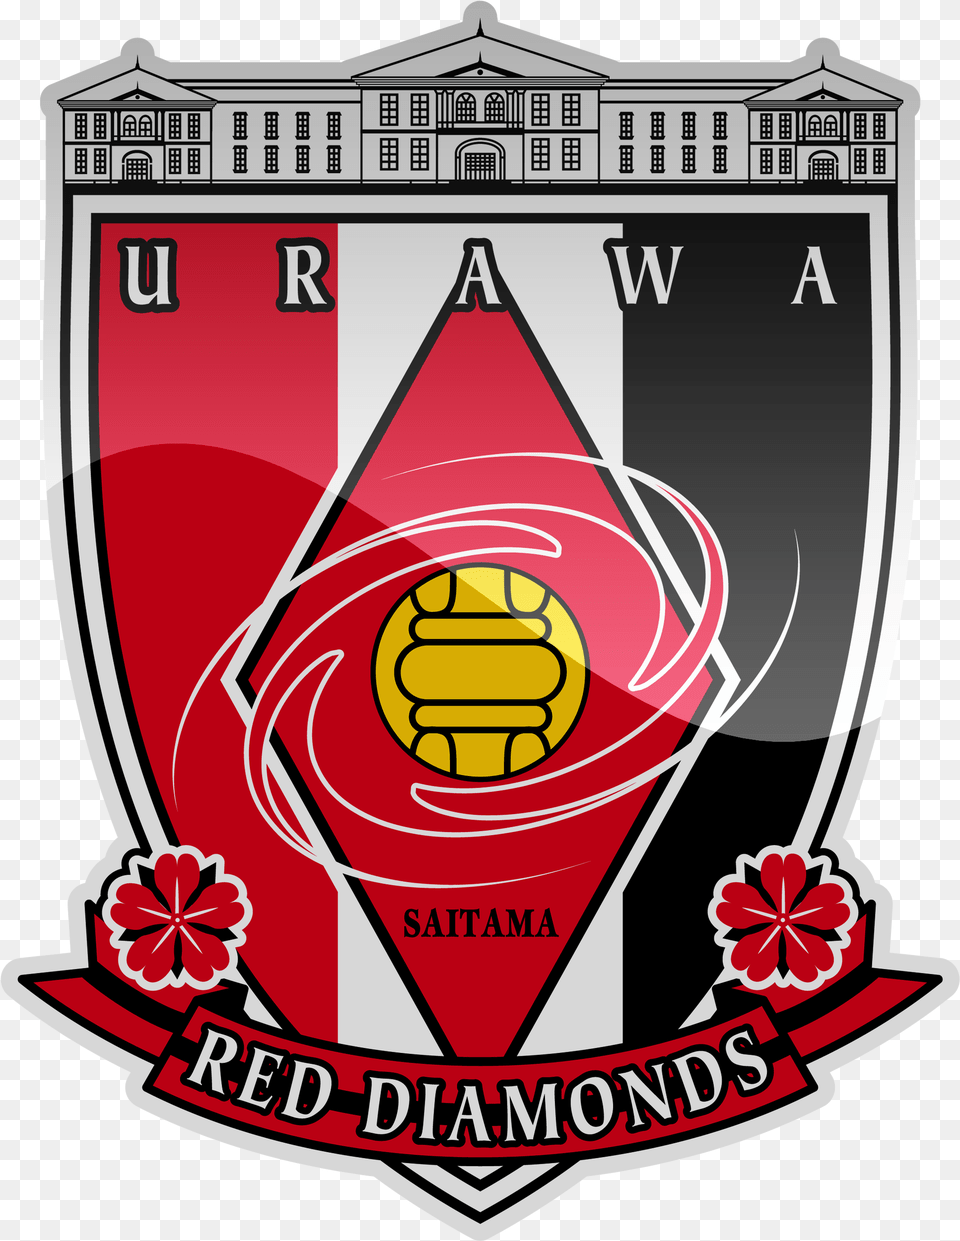 Urawa Red Diamonds Hd Logo Urawa Red Diamonds Logo, Emblem, Symbol, Badge, Dynamite Png Image